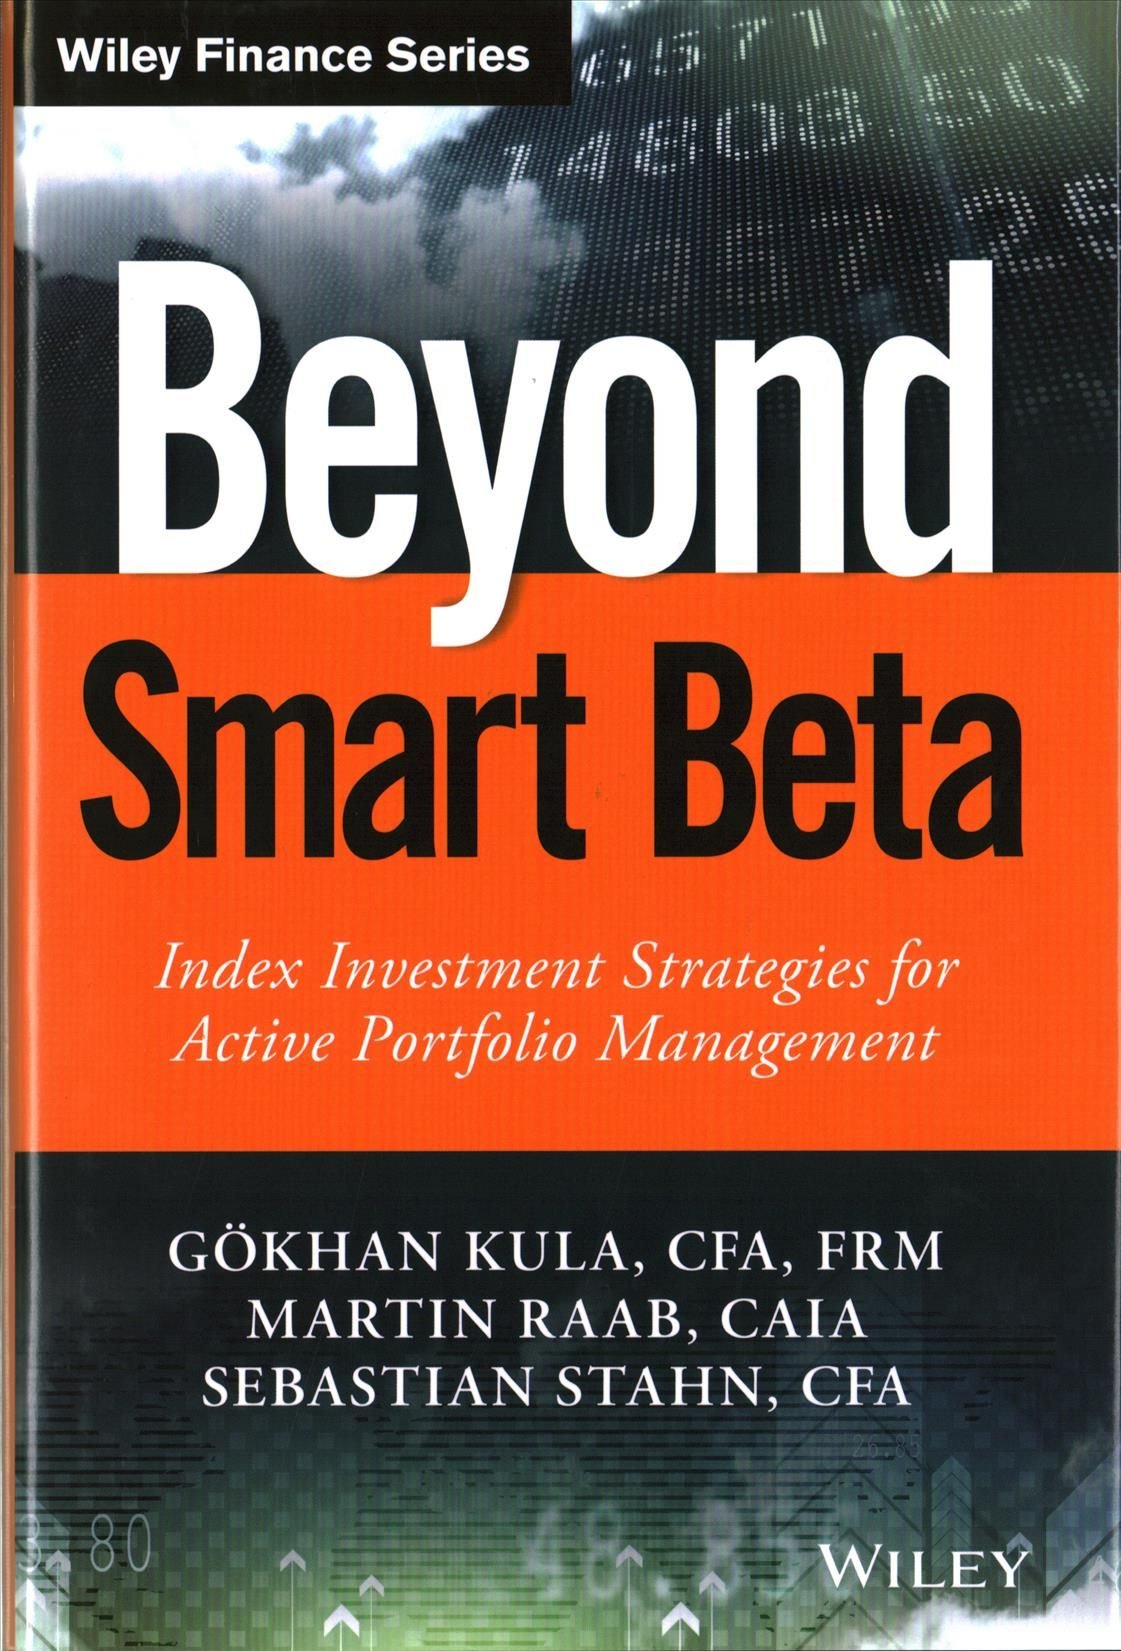 Beyond Smart Beta - Index Investment Strategies for Active Portfolio Management